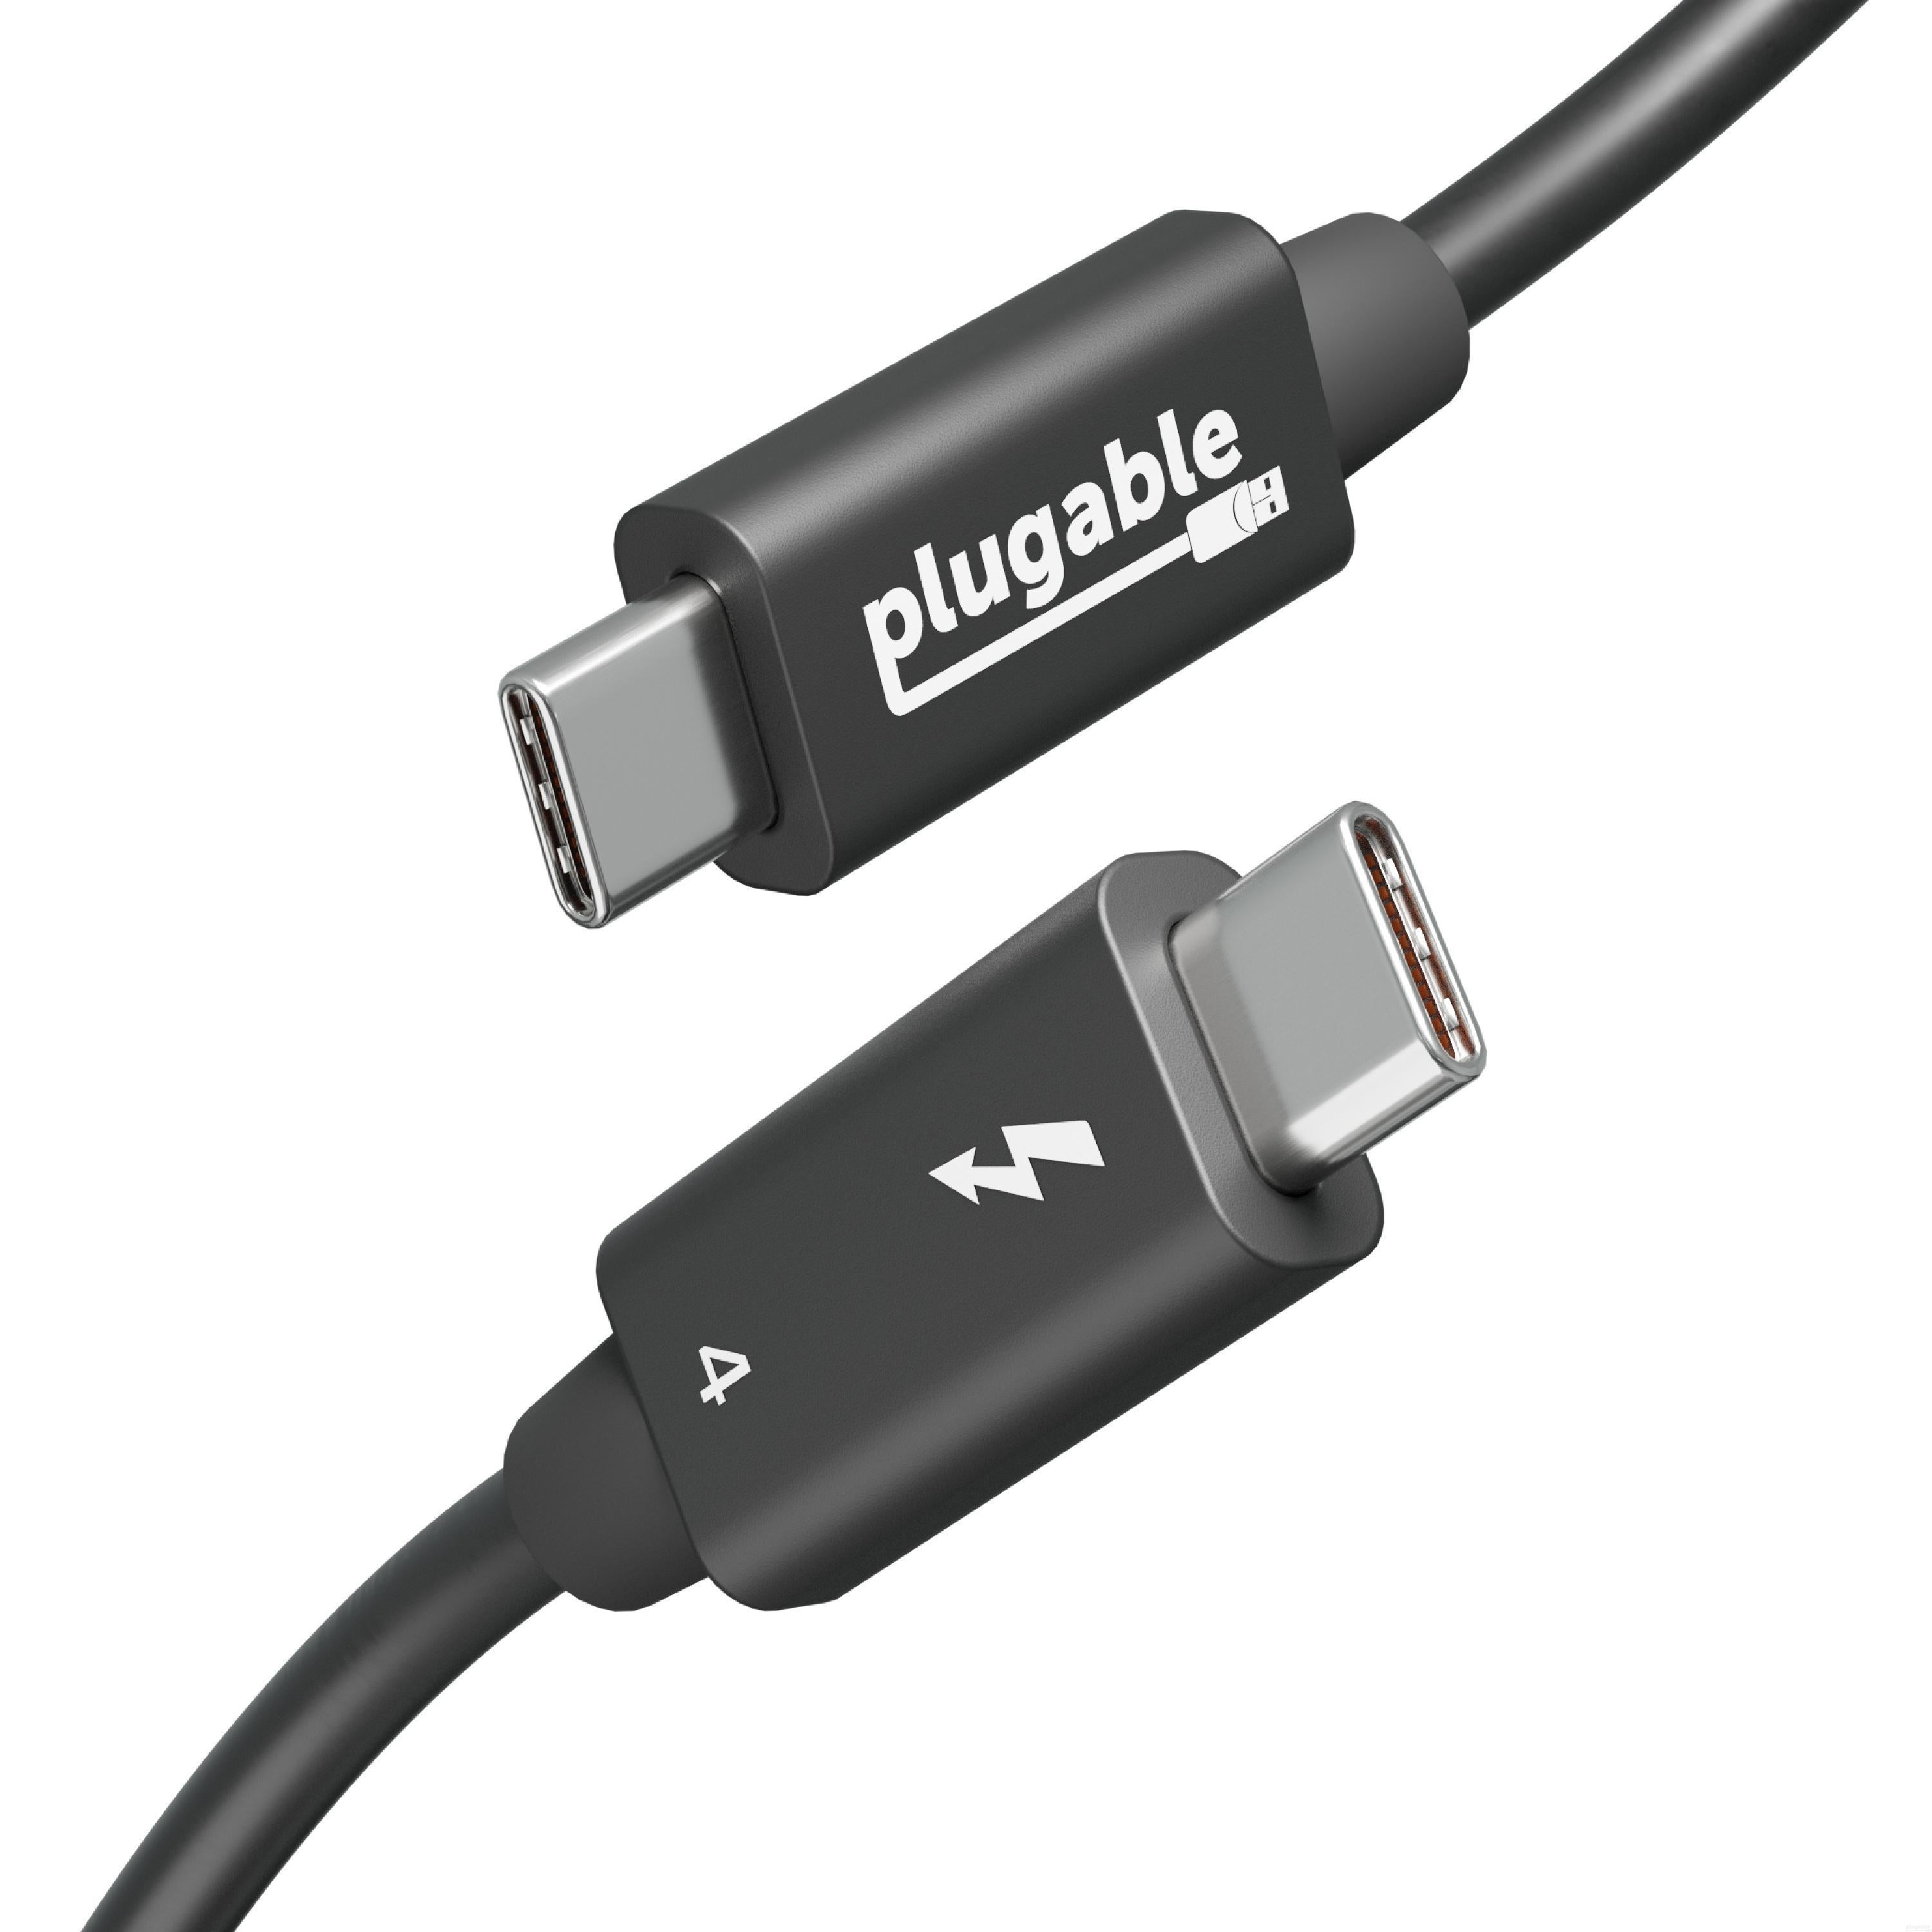 Plugable Thunderbolt 4 240W EPR Cable (3.3ft/1m) – Plugable Technologies